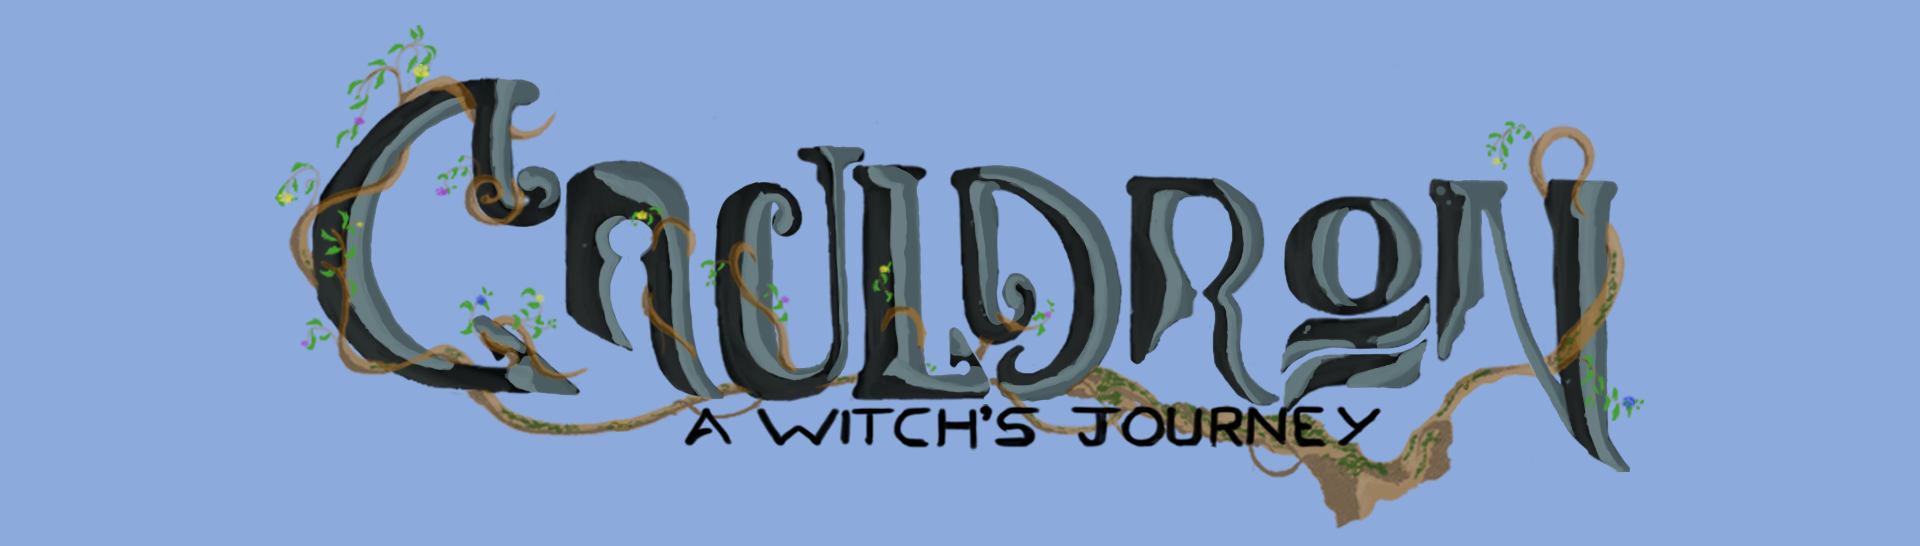 The Cauldron: A Witch's Journey